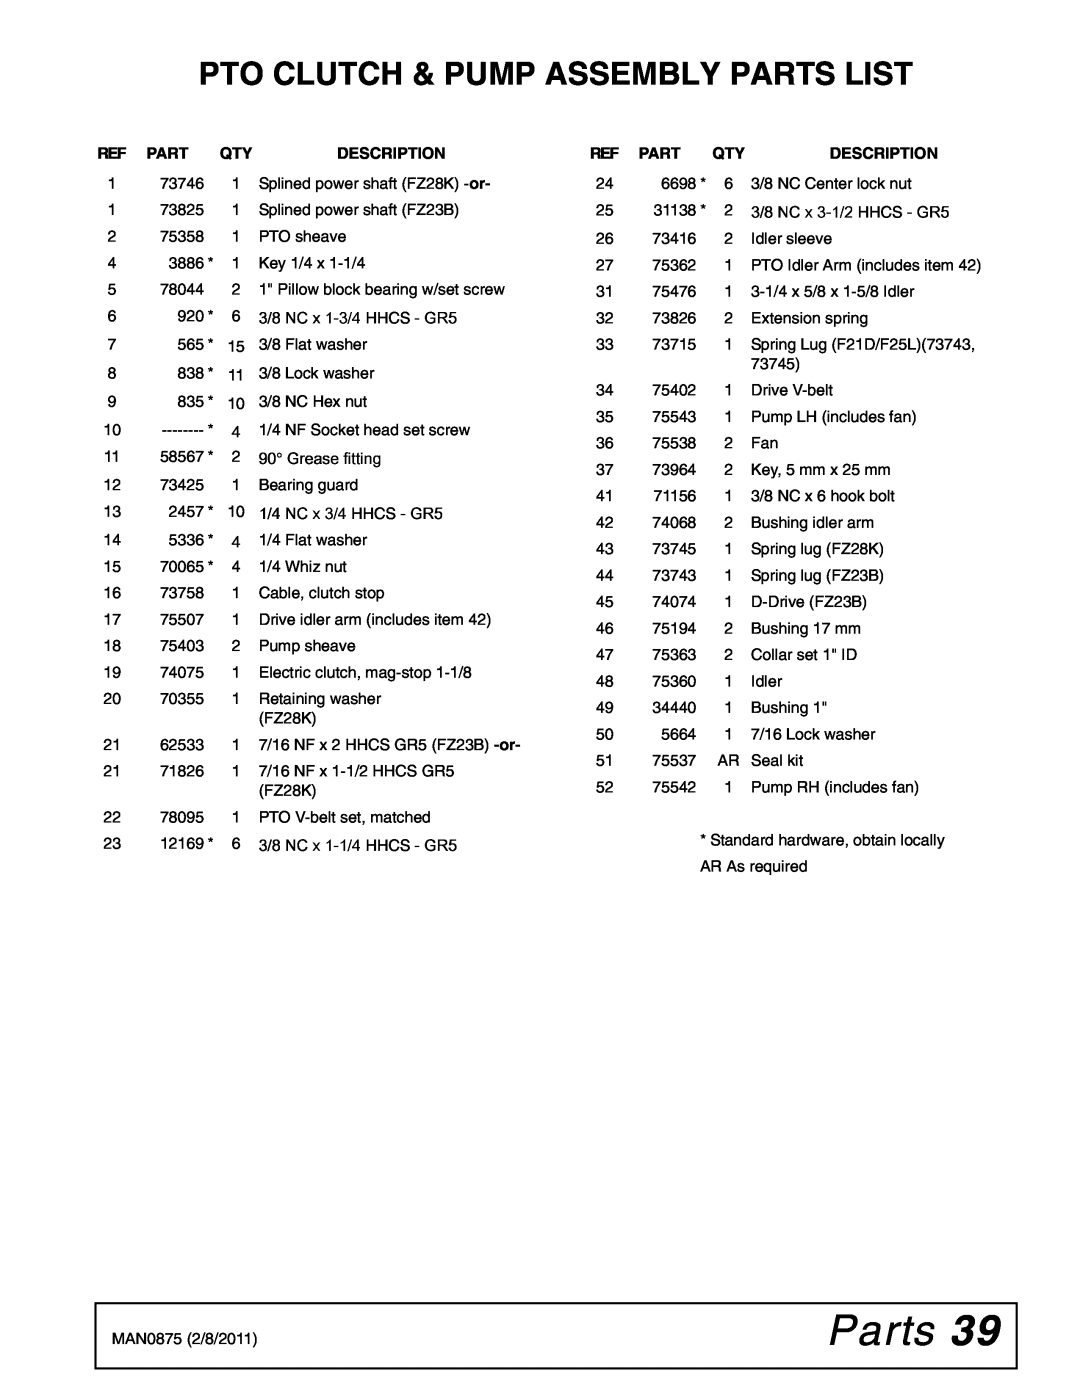 Woods Equipment FZ23B, FZ28K manual Pto Clutch & Pump Assembly Parts List, 1/4NCx3/4, 3/8NCx1-1/4, BearingGreaseguardfitting 